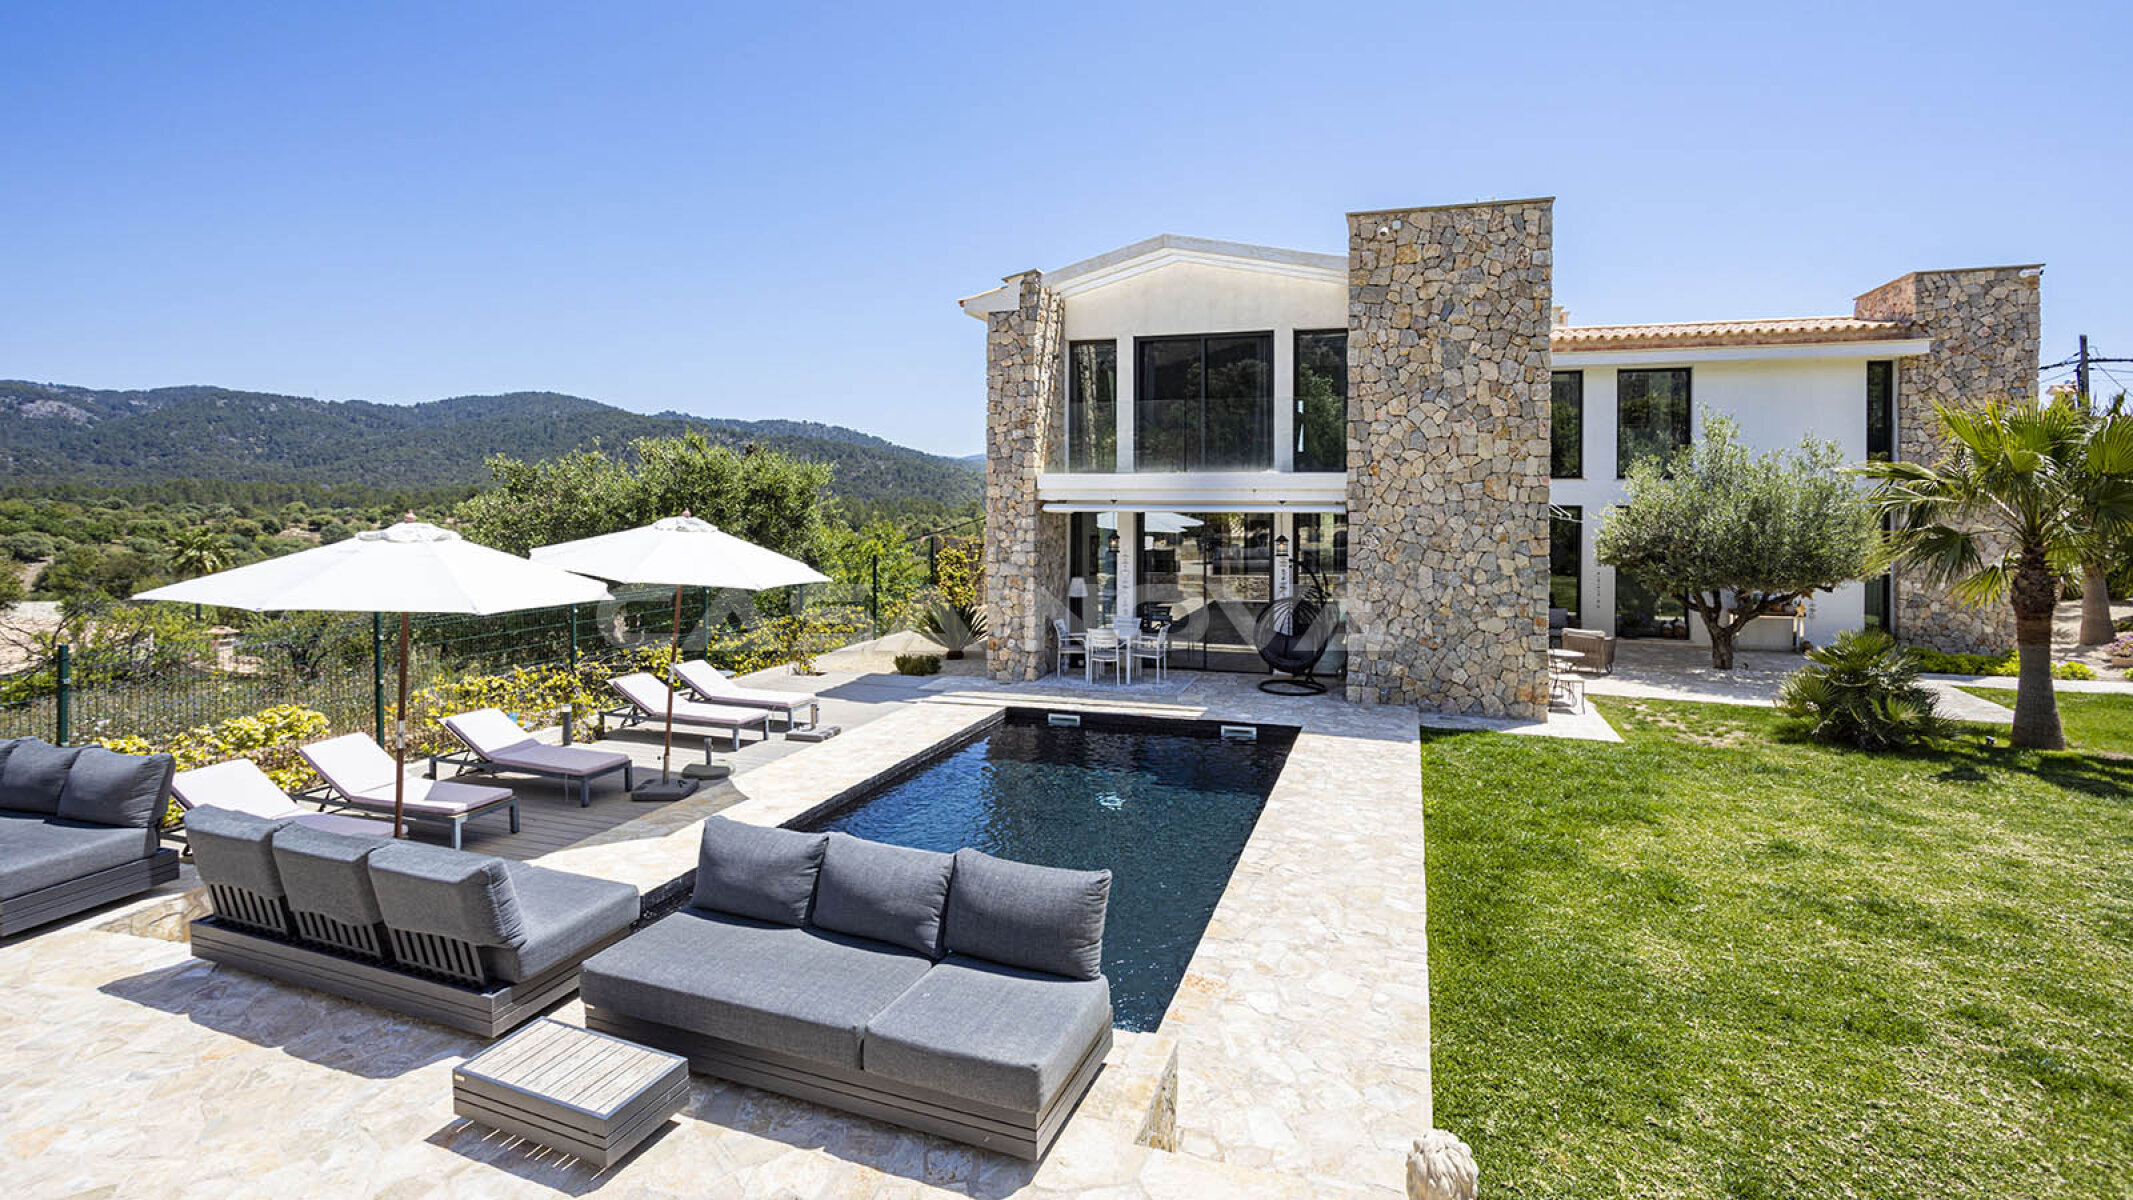 New built villa in finca style in picturesque surroundings